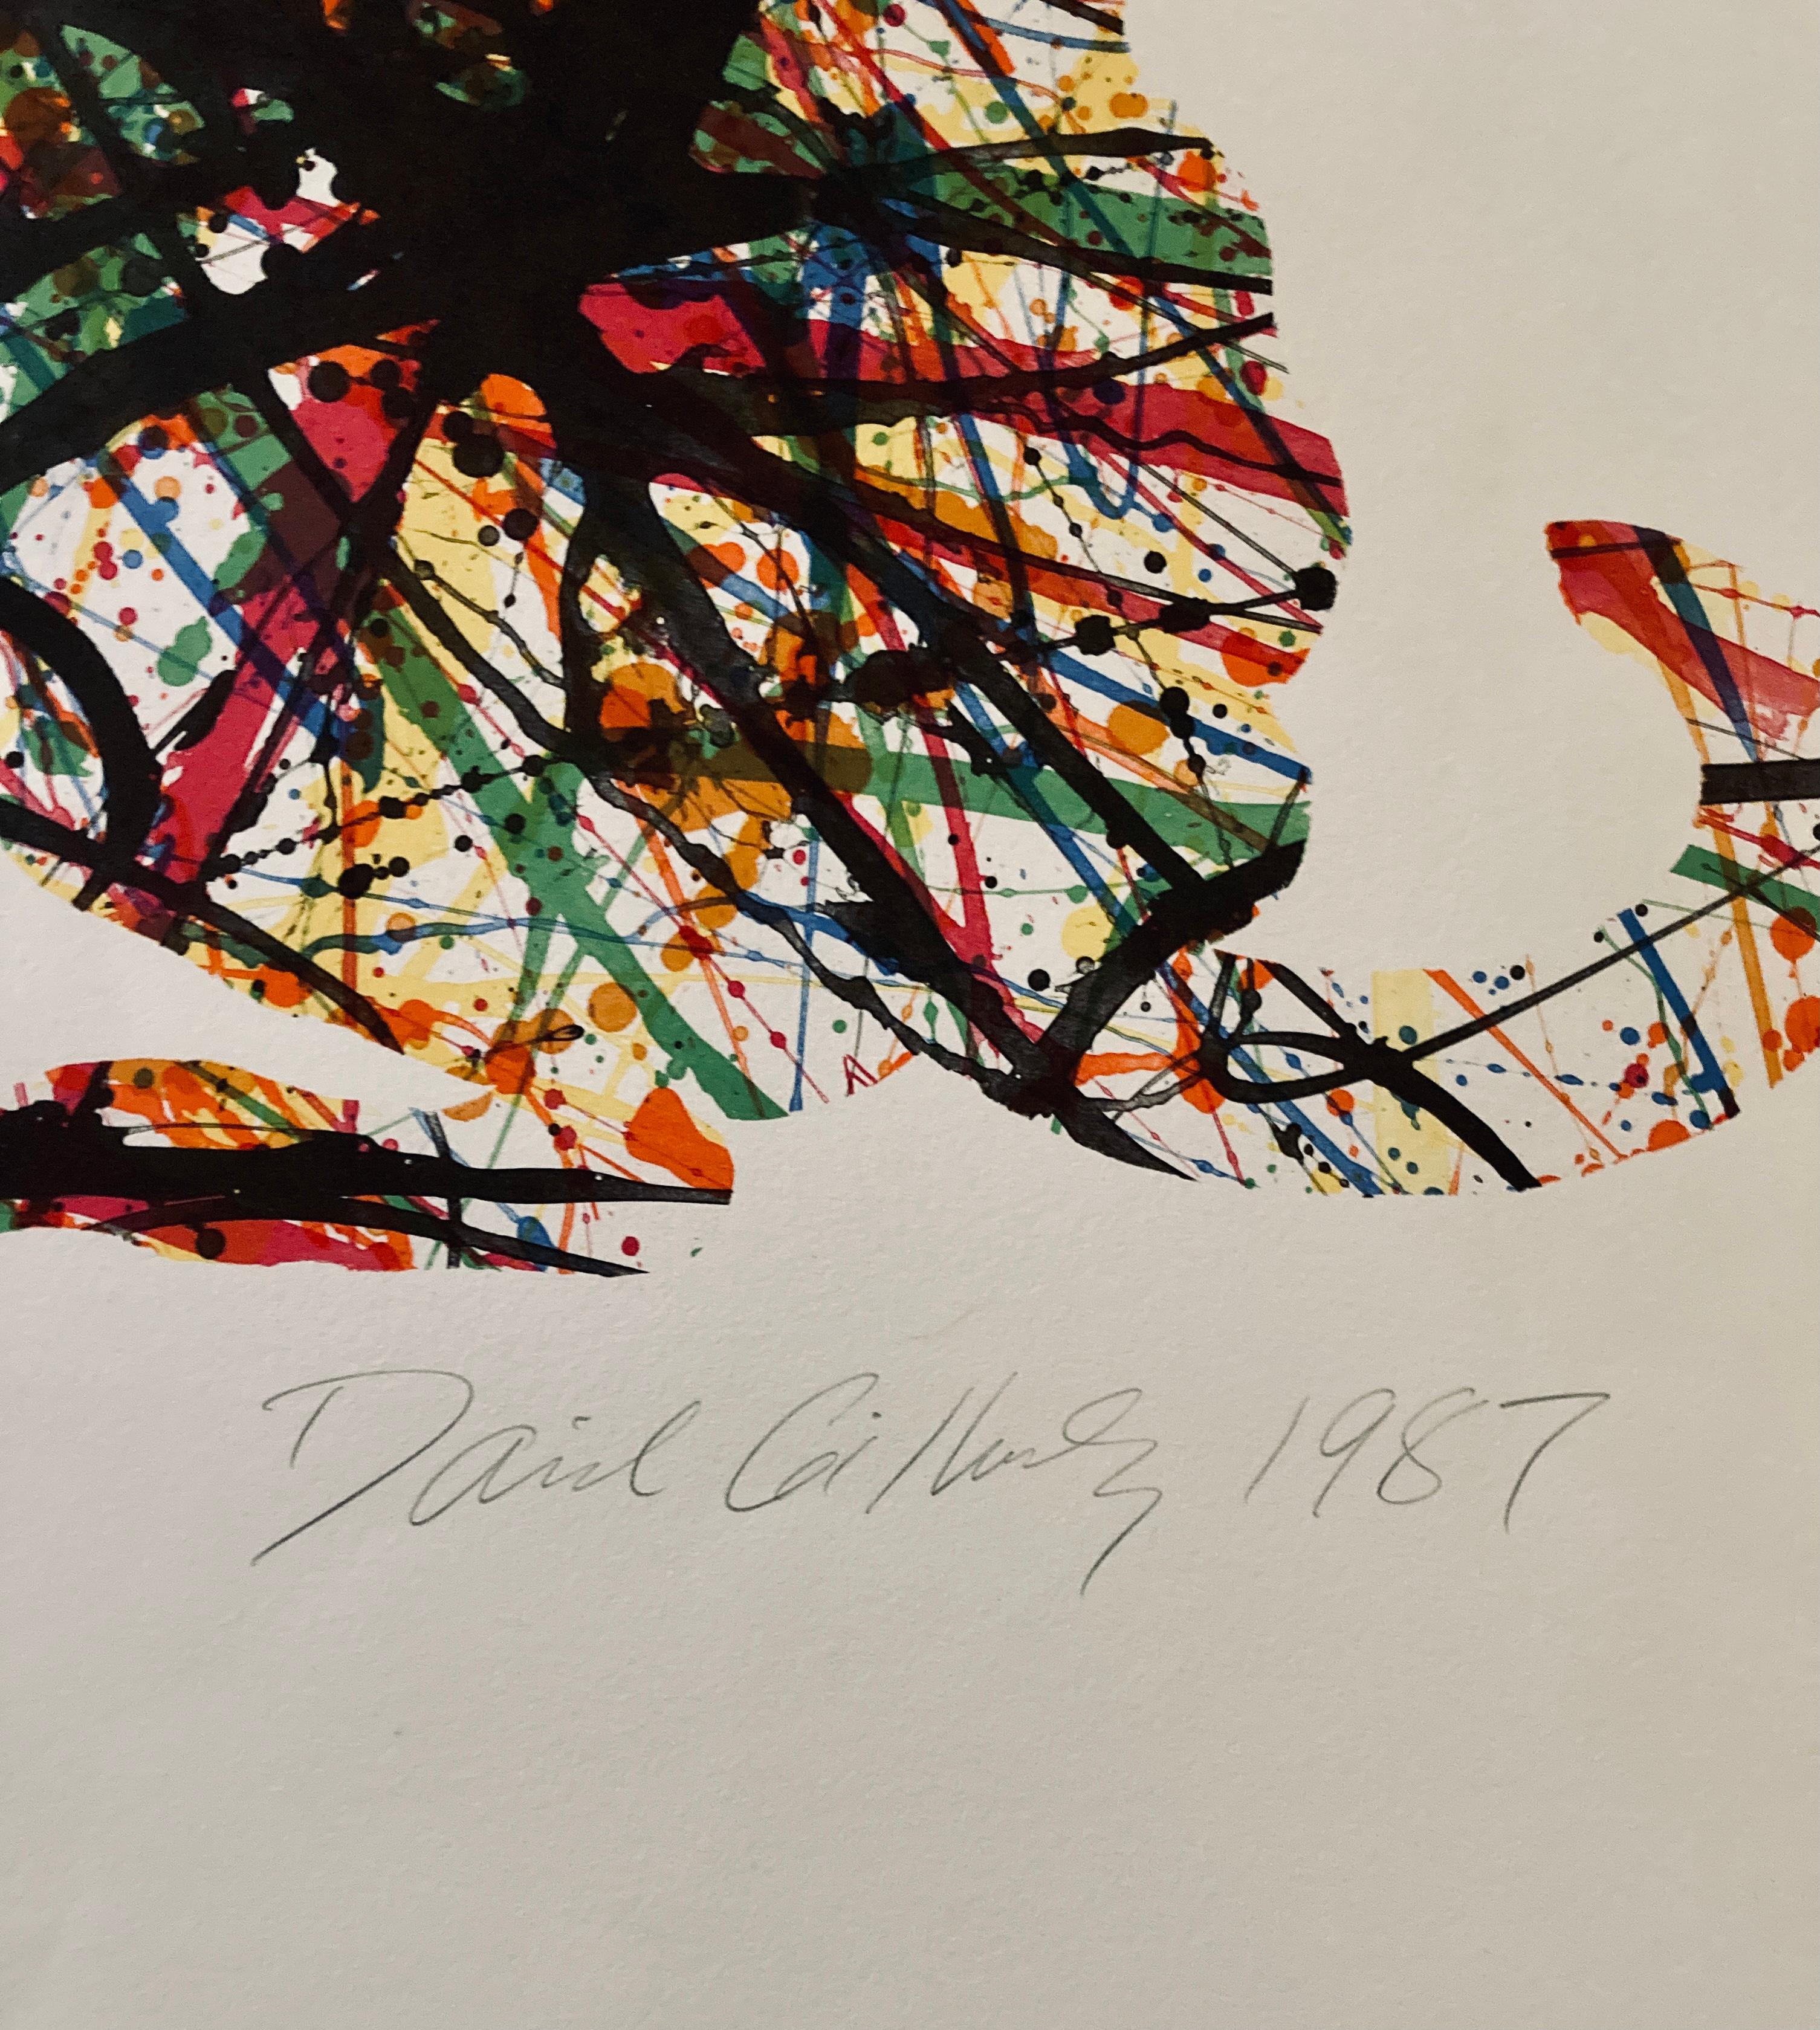 David Gilhooly 'Jackson Pollack’s Dog The Litho' Signed Artist's Proof Print 1